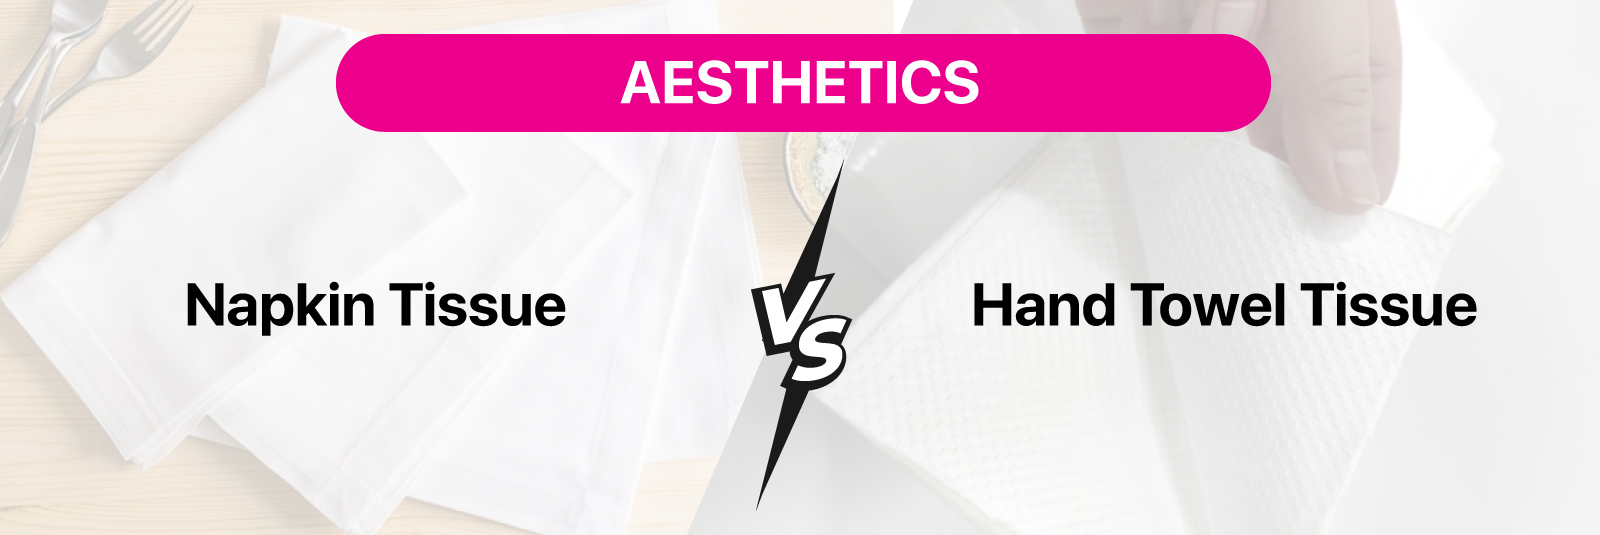 Aesthetics - Napkin Tissue vs Hand Towel Tissue